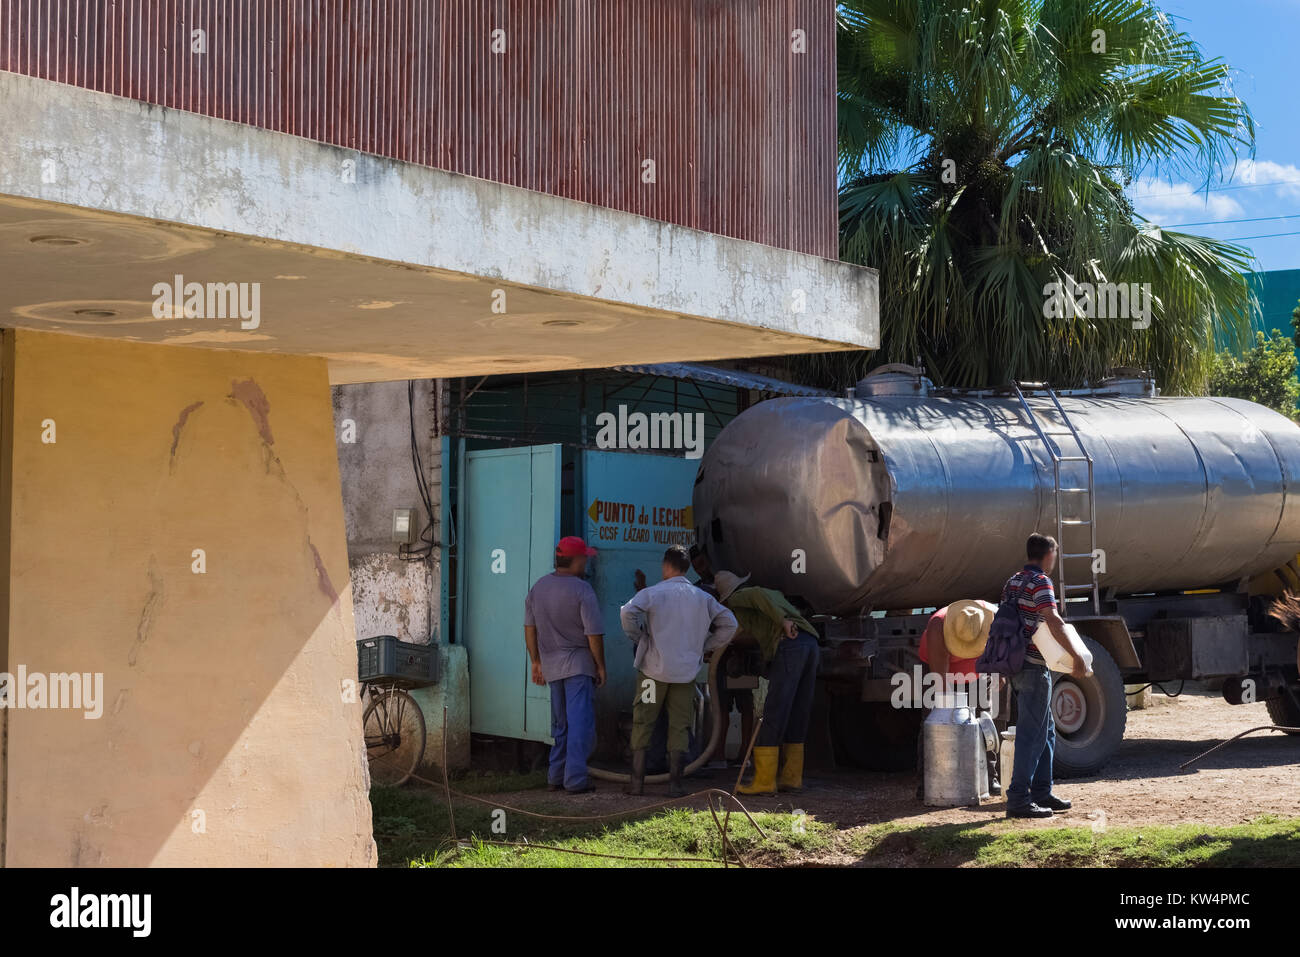 Milchrationen für die kubanische Bevölkerung in Santa Clara Kuba - Serie Kuba Reportage Stock Photo